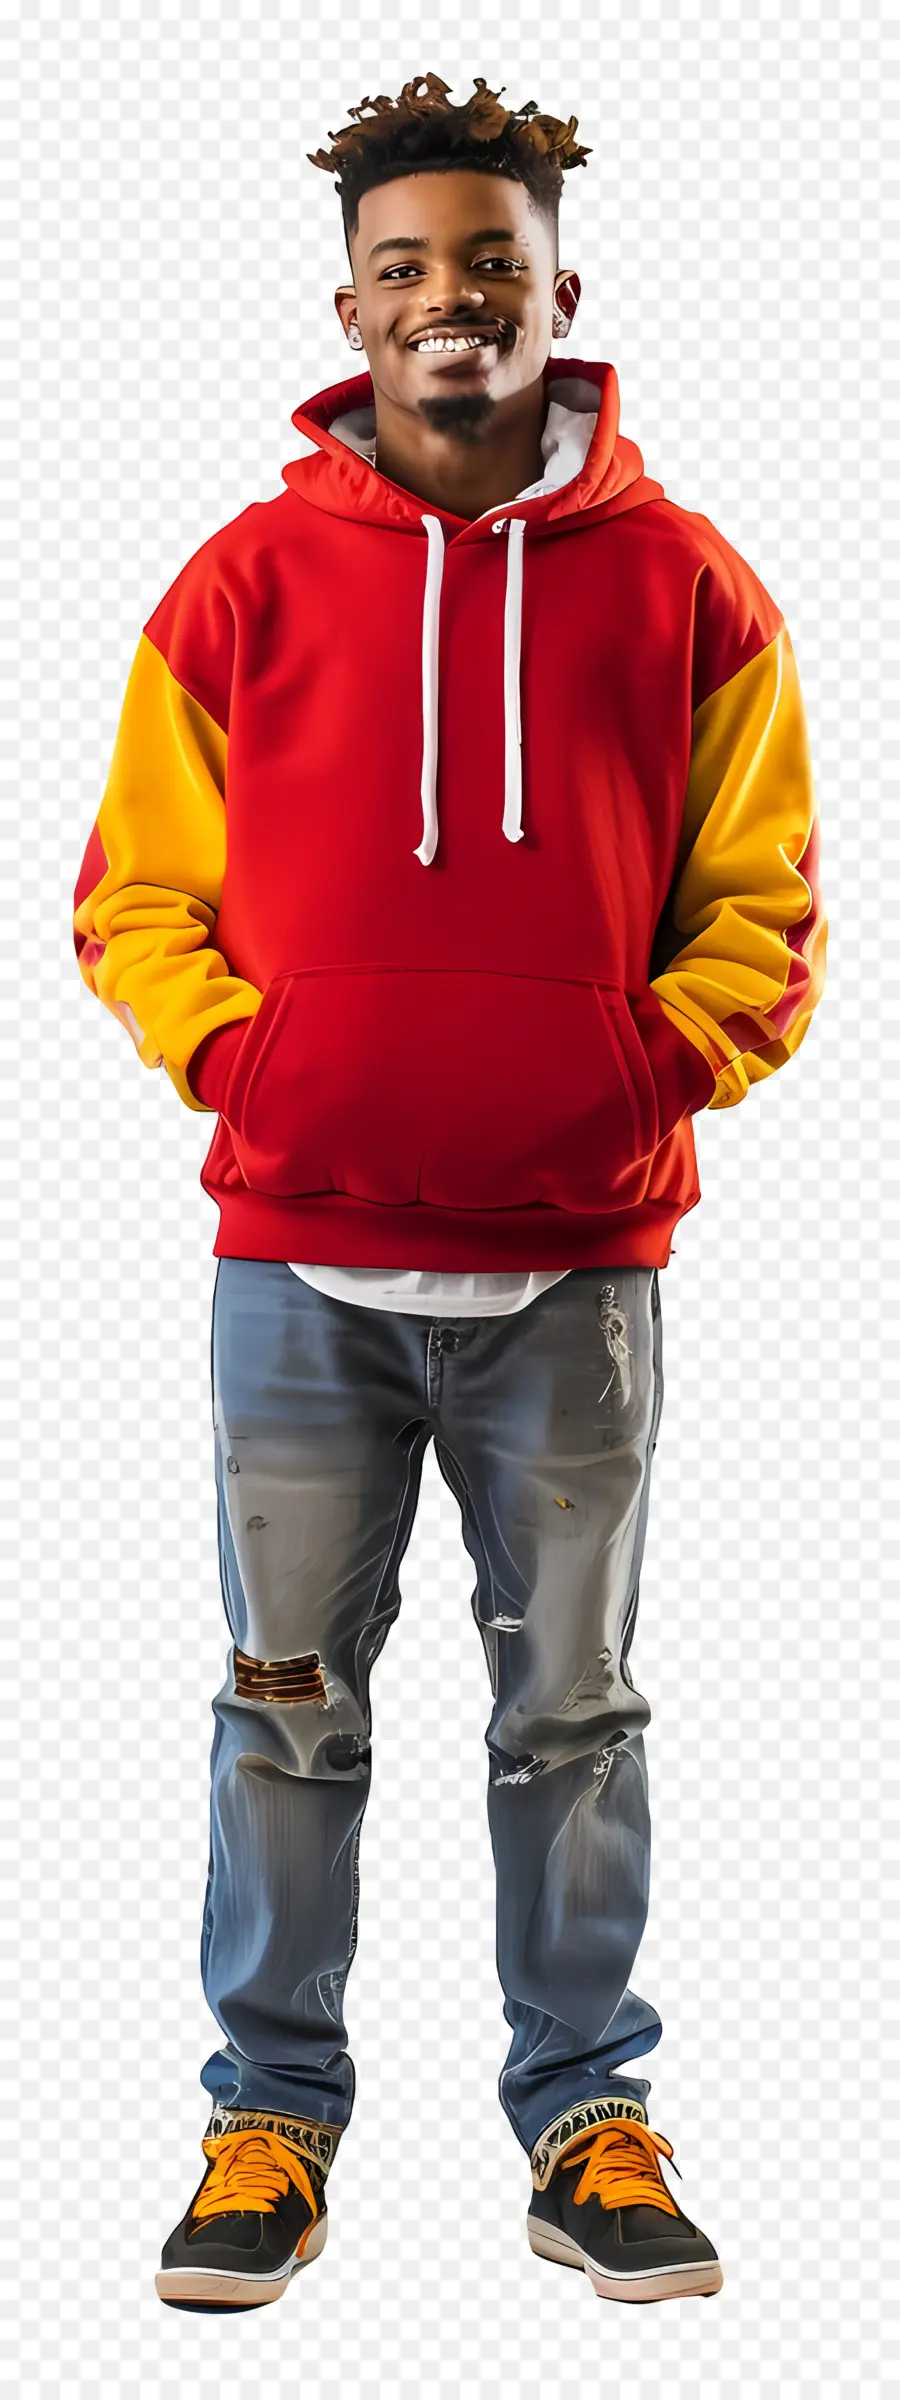 Happy Black Man Red and Yellow Fedeshirt Jeans Sneaker Man With Dreadlocks - Uomo in felpa con cappuccio rosso e giallo sorridente